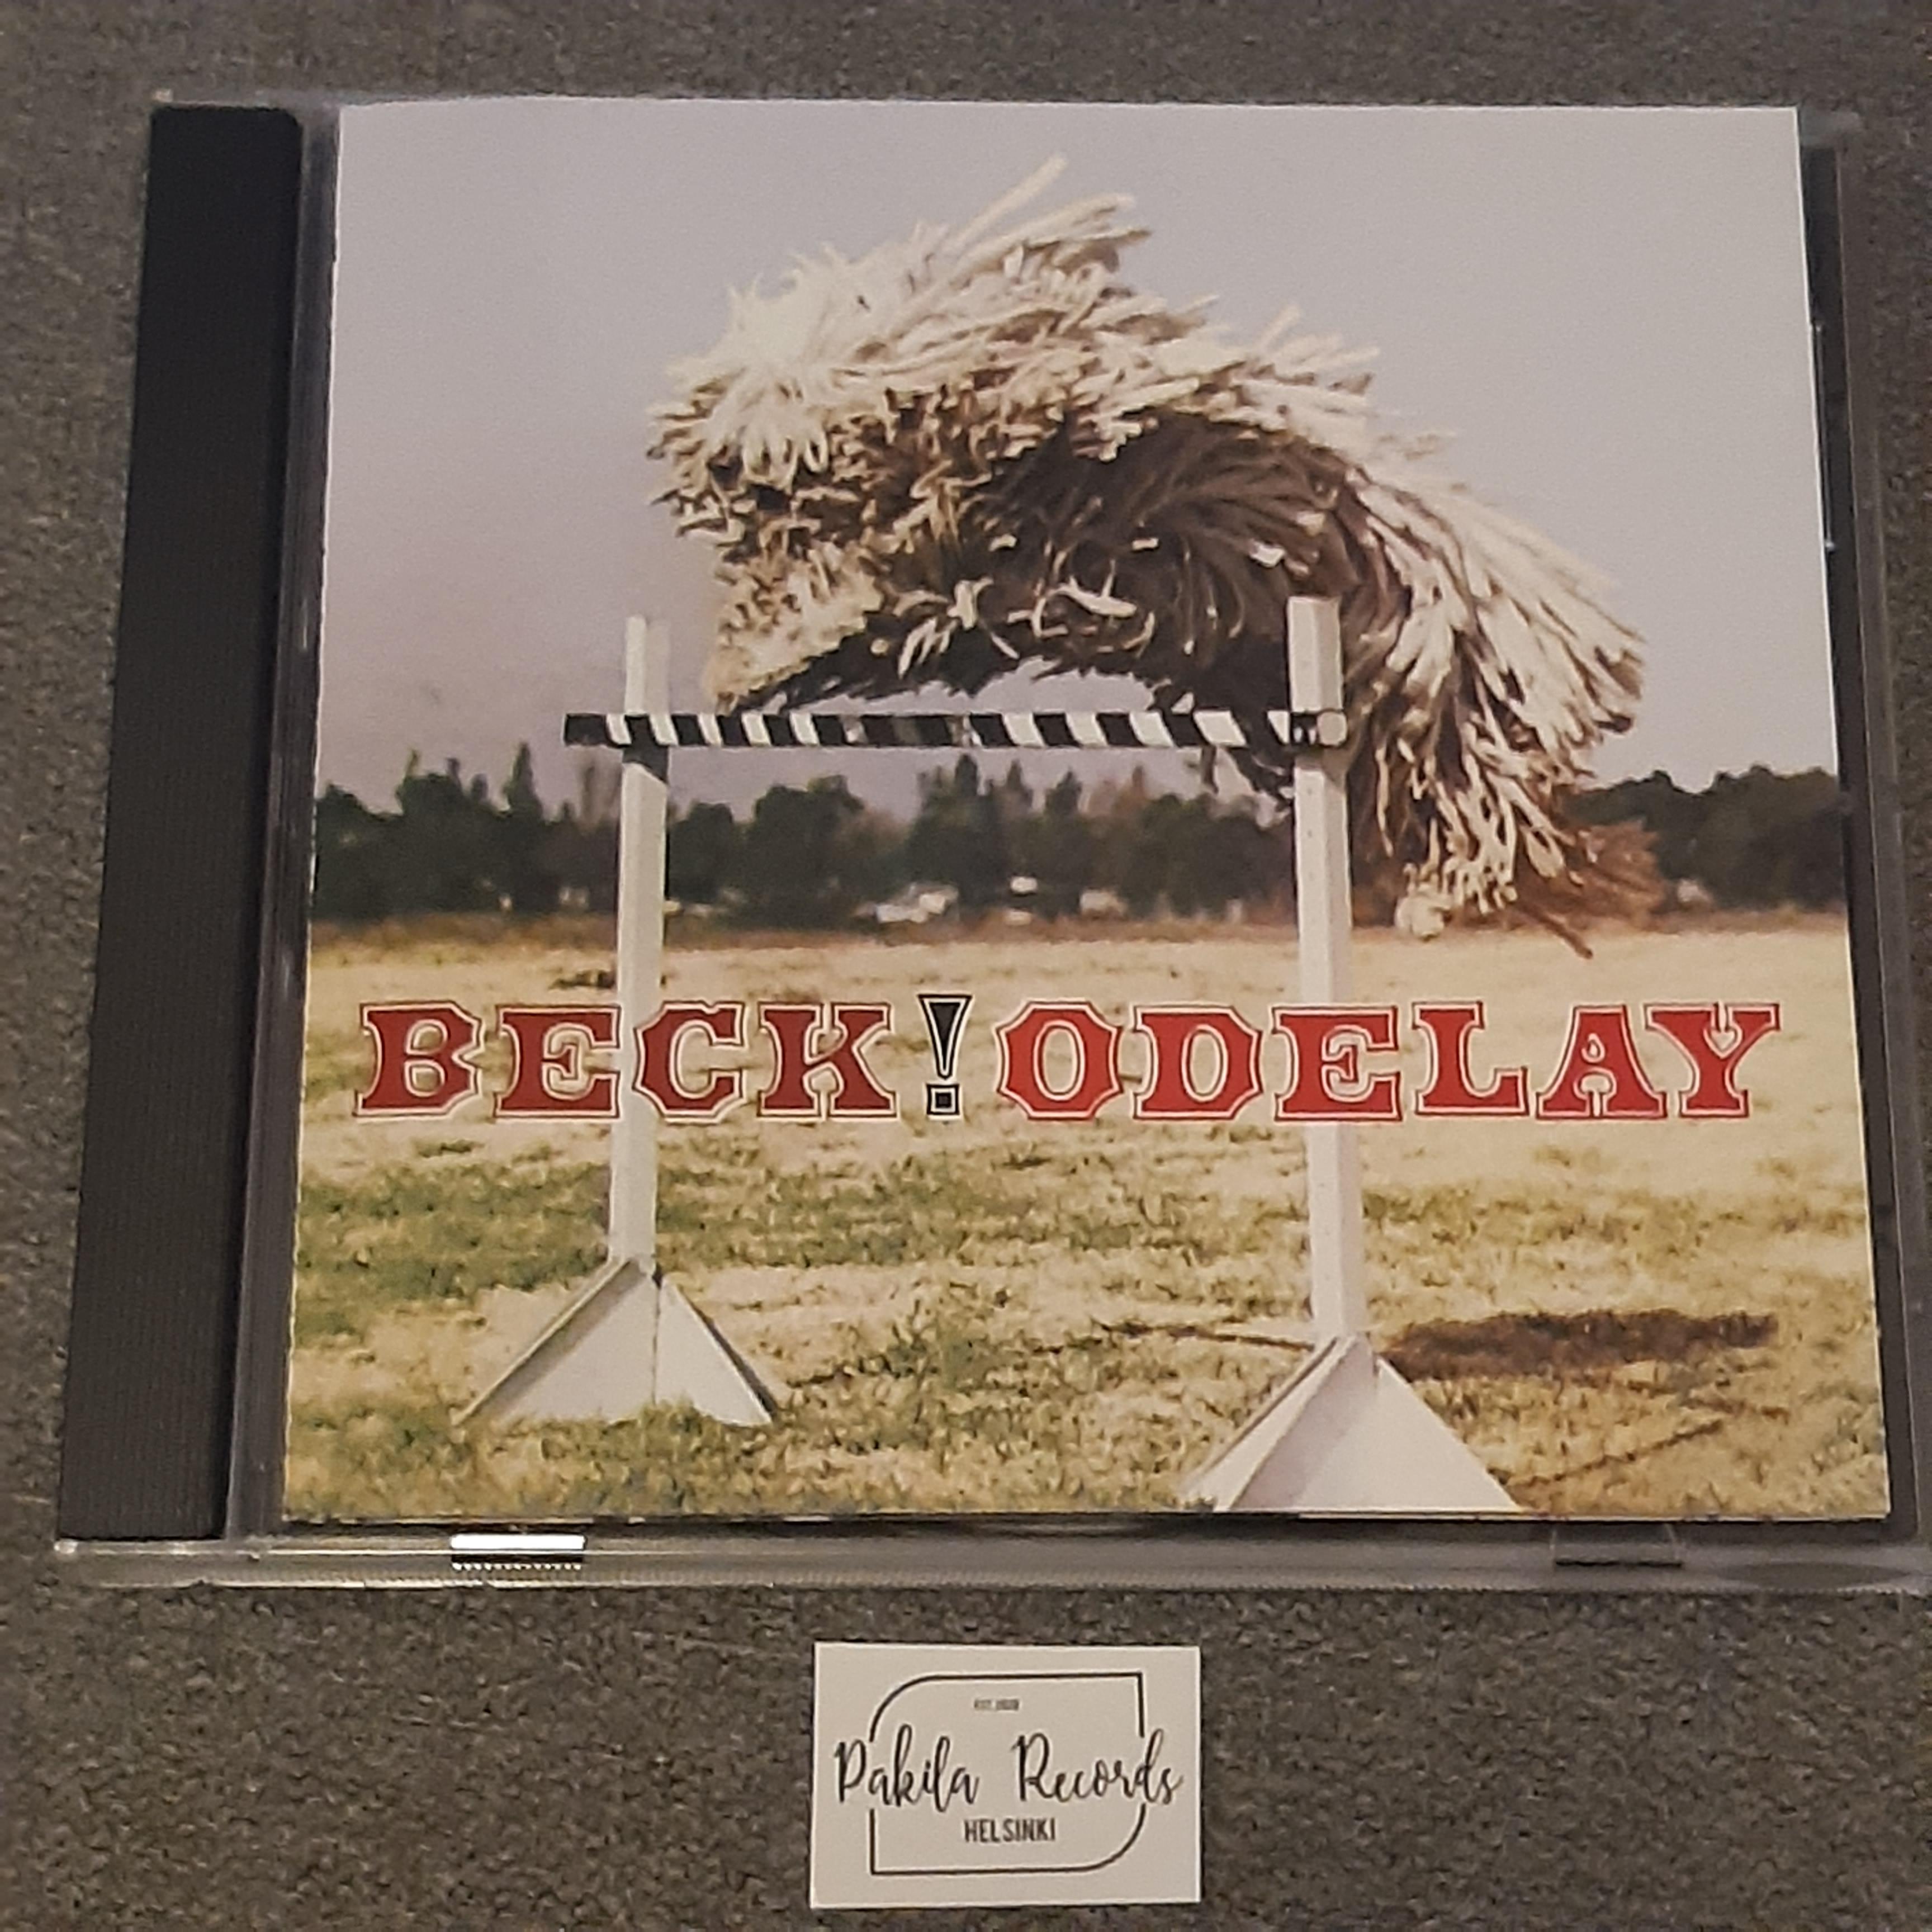 Beck - Odelay - CD (käytetty)